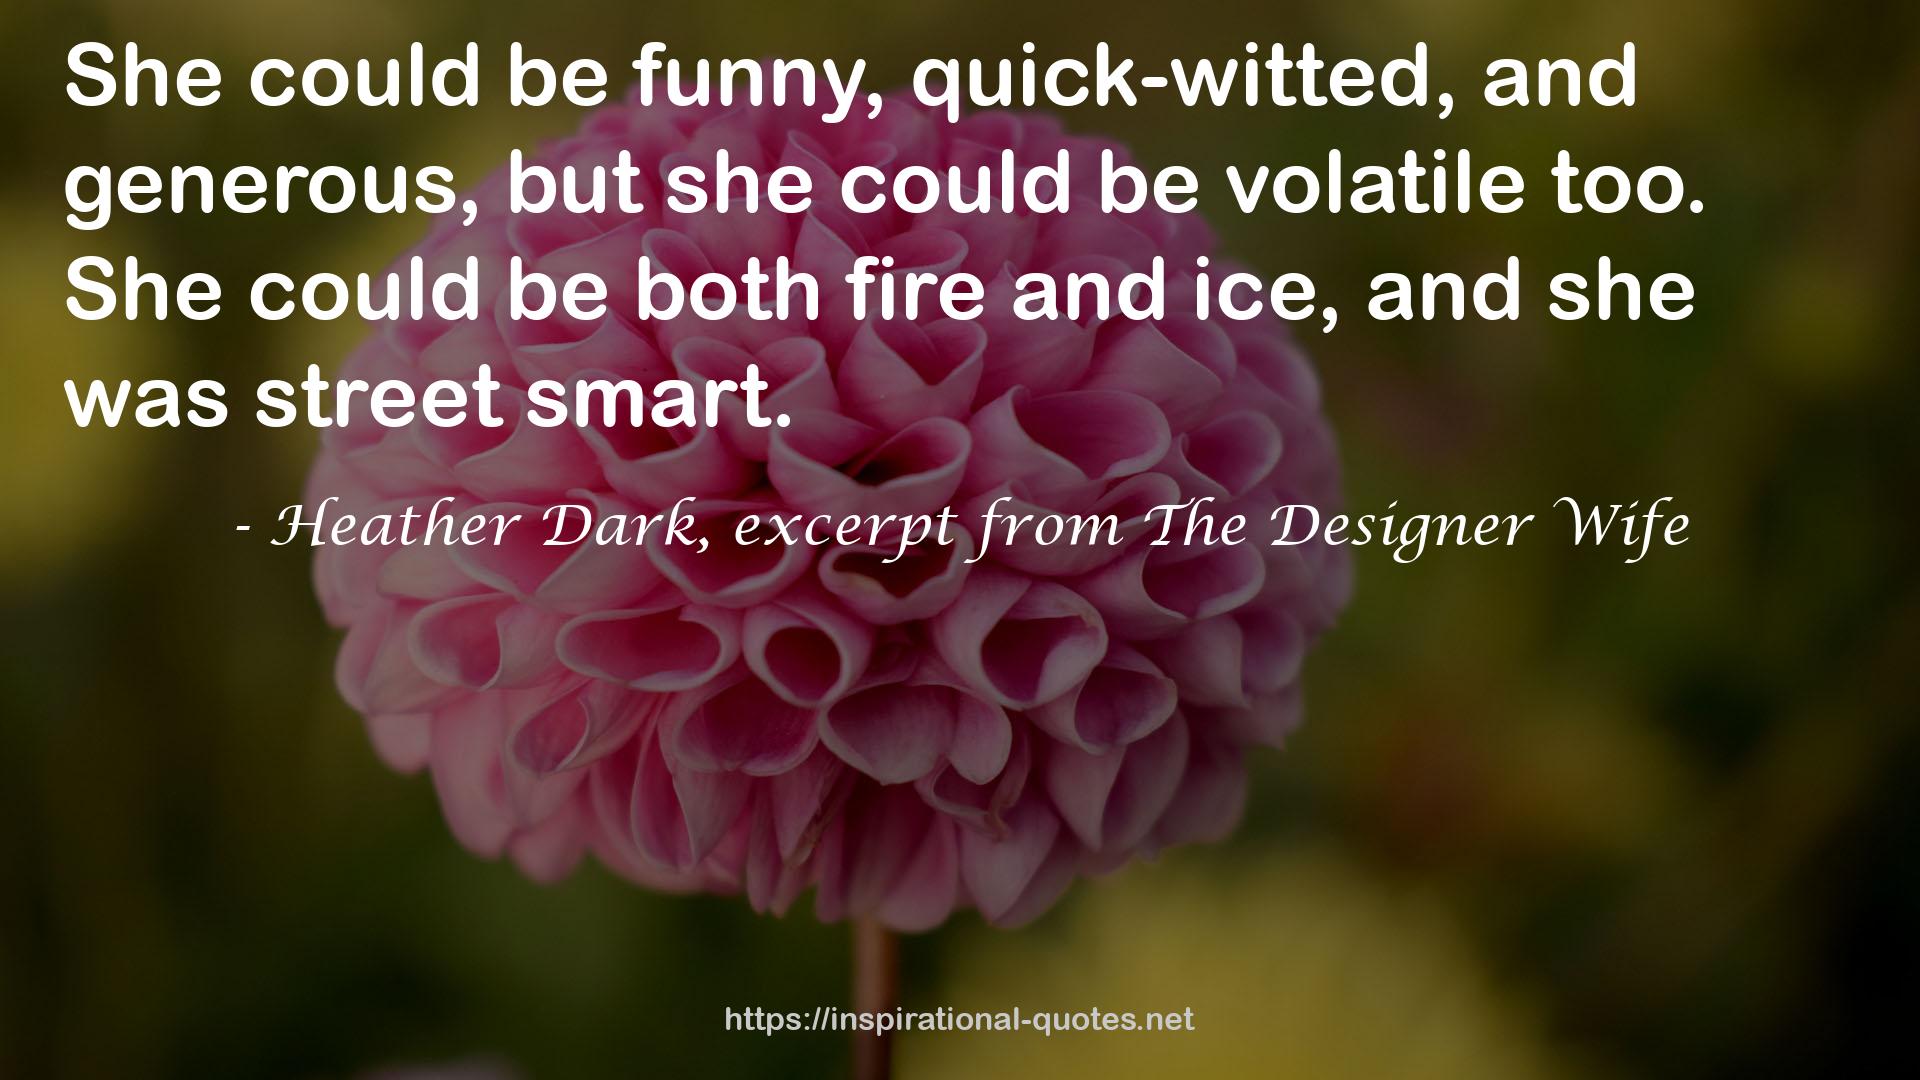 Heather Dark, excerpt from The Designer Wife QUOTES